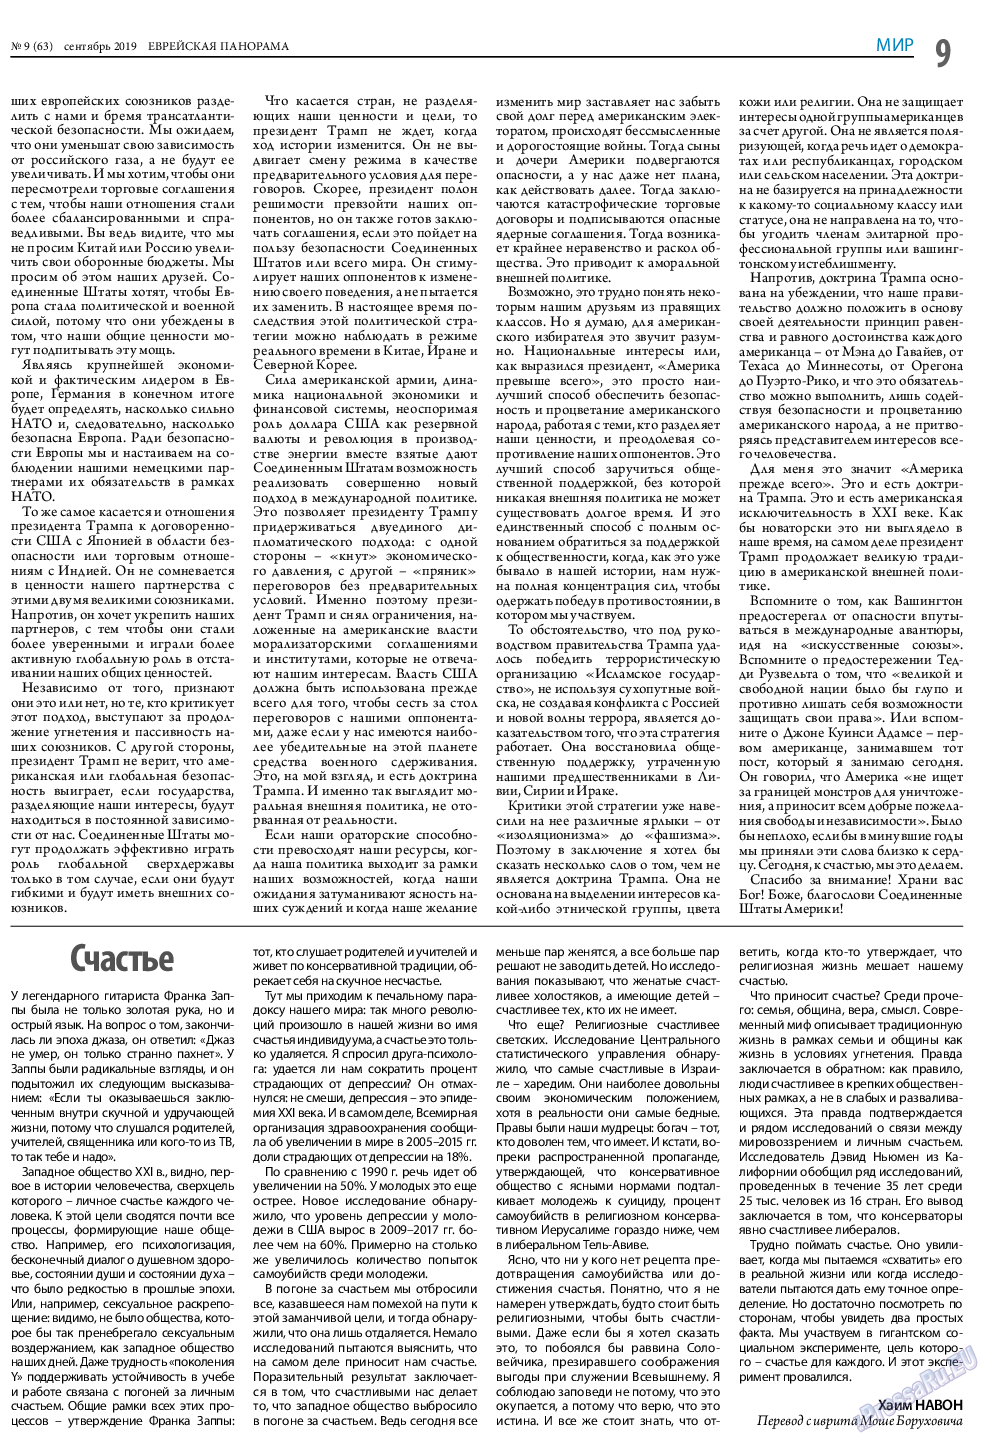 Еврейская панорама, газета. 2019 №9 стр.9